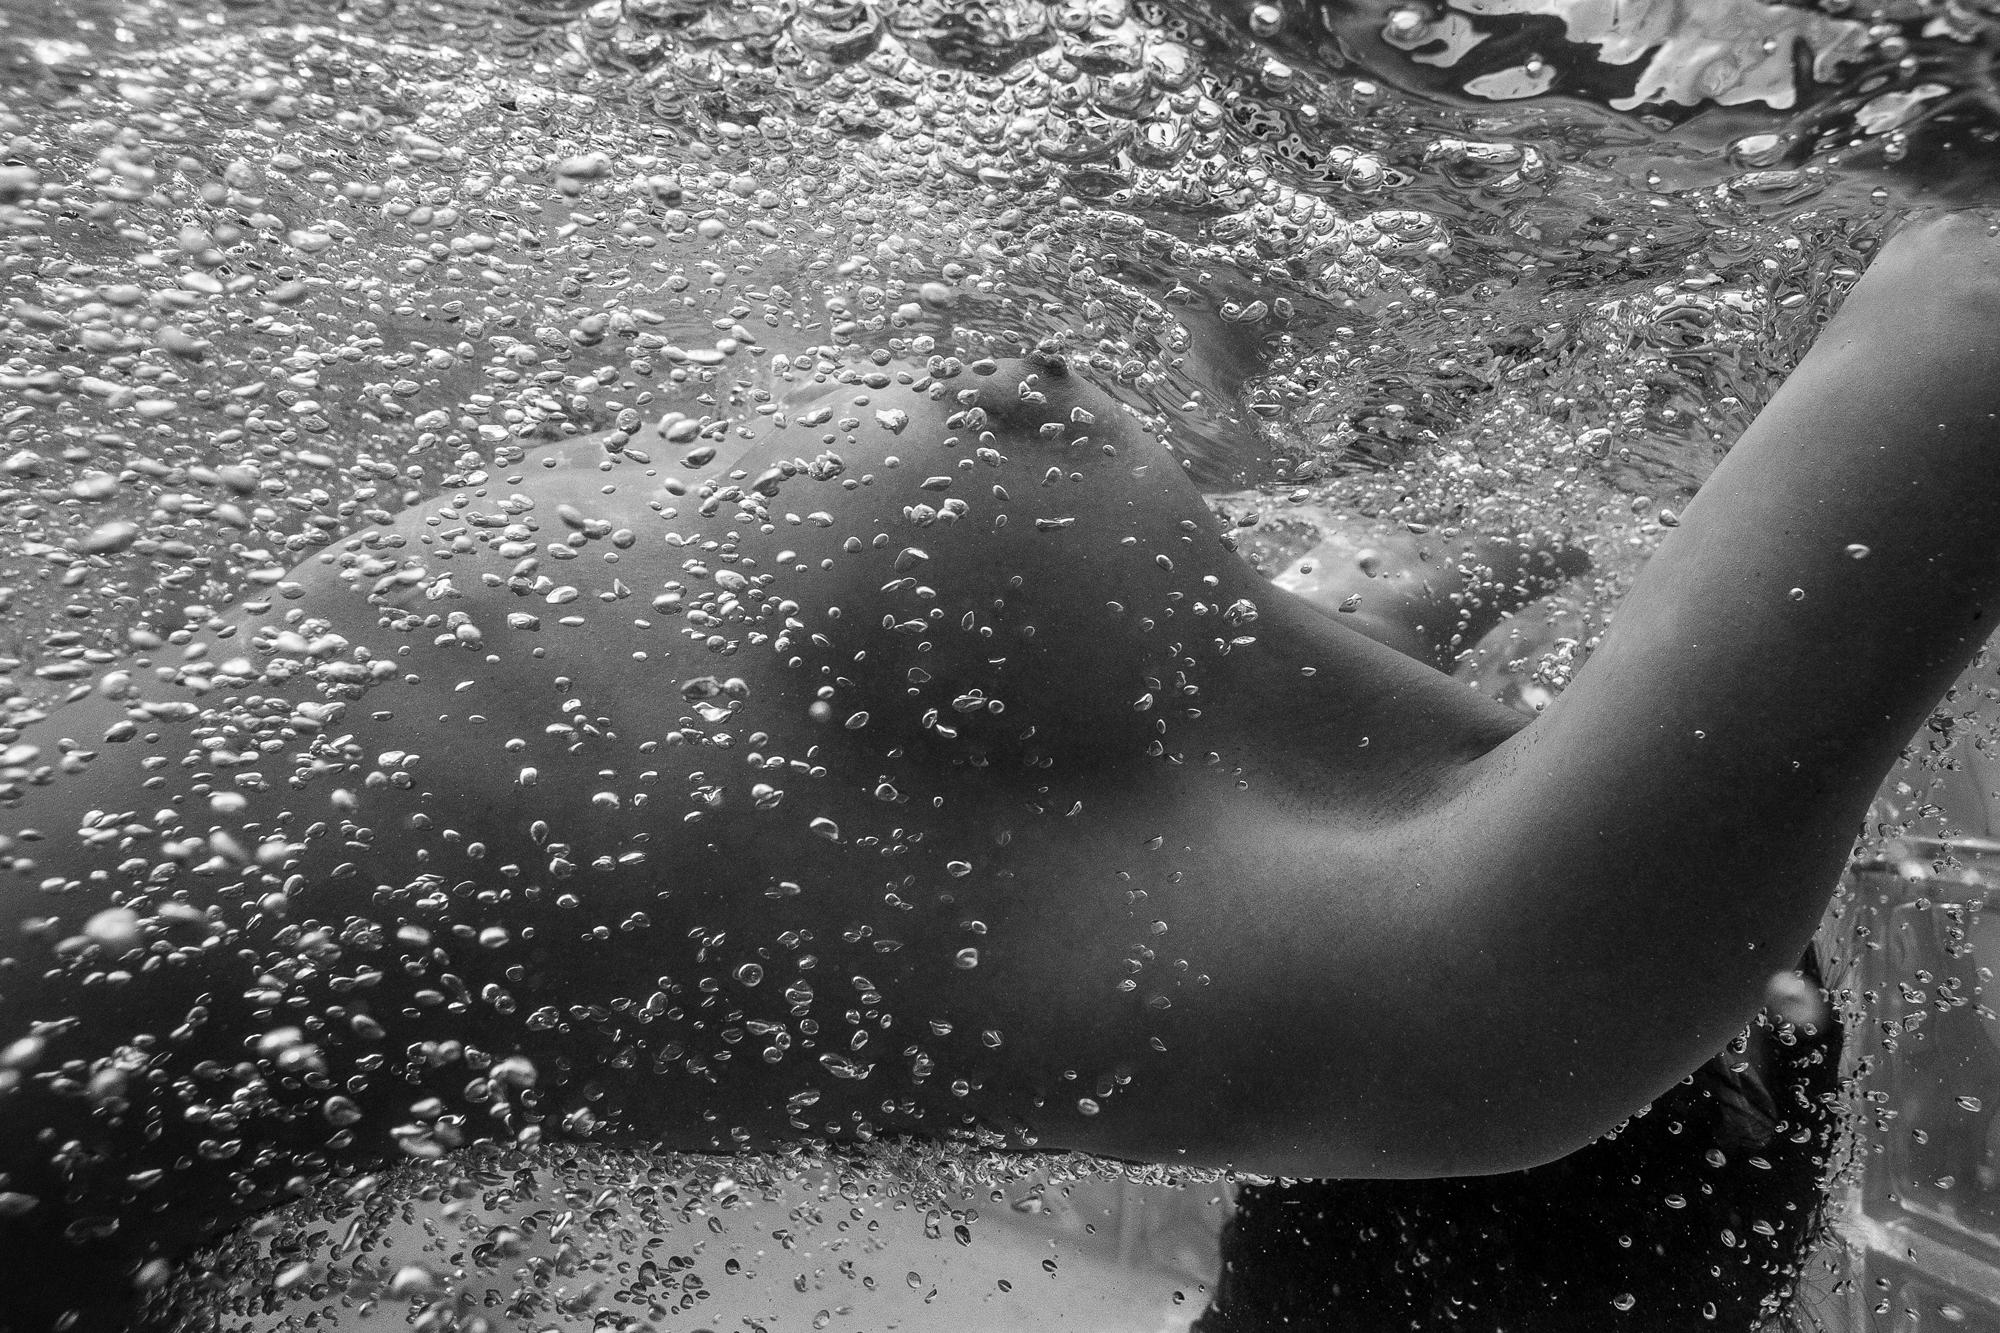 Alex Sher Nude Photograph - Bubbles - underwater black & white nude photograph - print on aluminum 24 x 36"